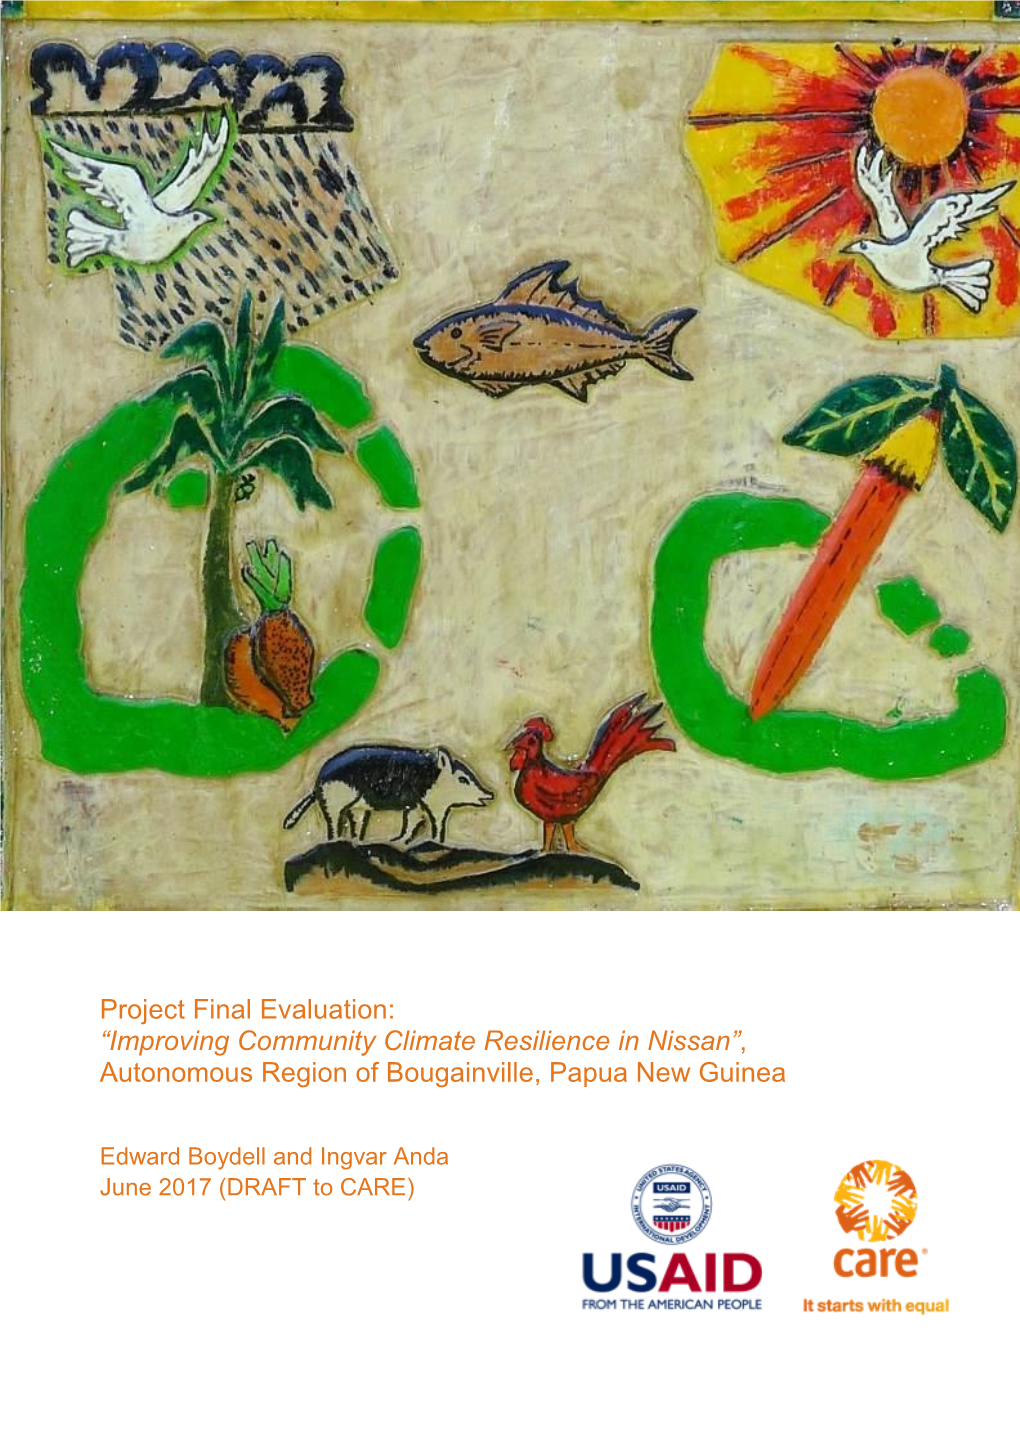 Project Final Evaluation: “Improving Community Climate Resilience in Nissan”, Autonomous Region of Bougainville, Papua New Guinea